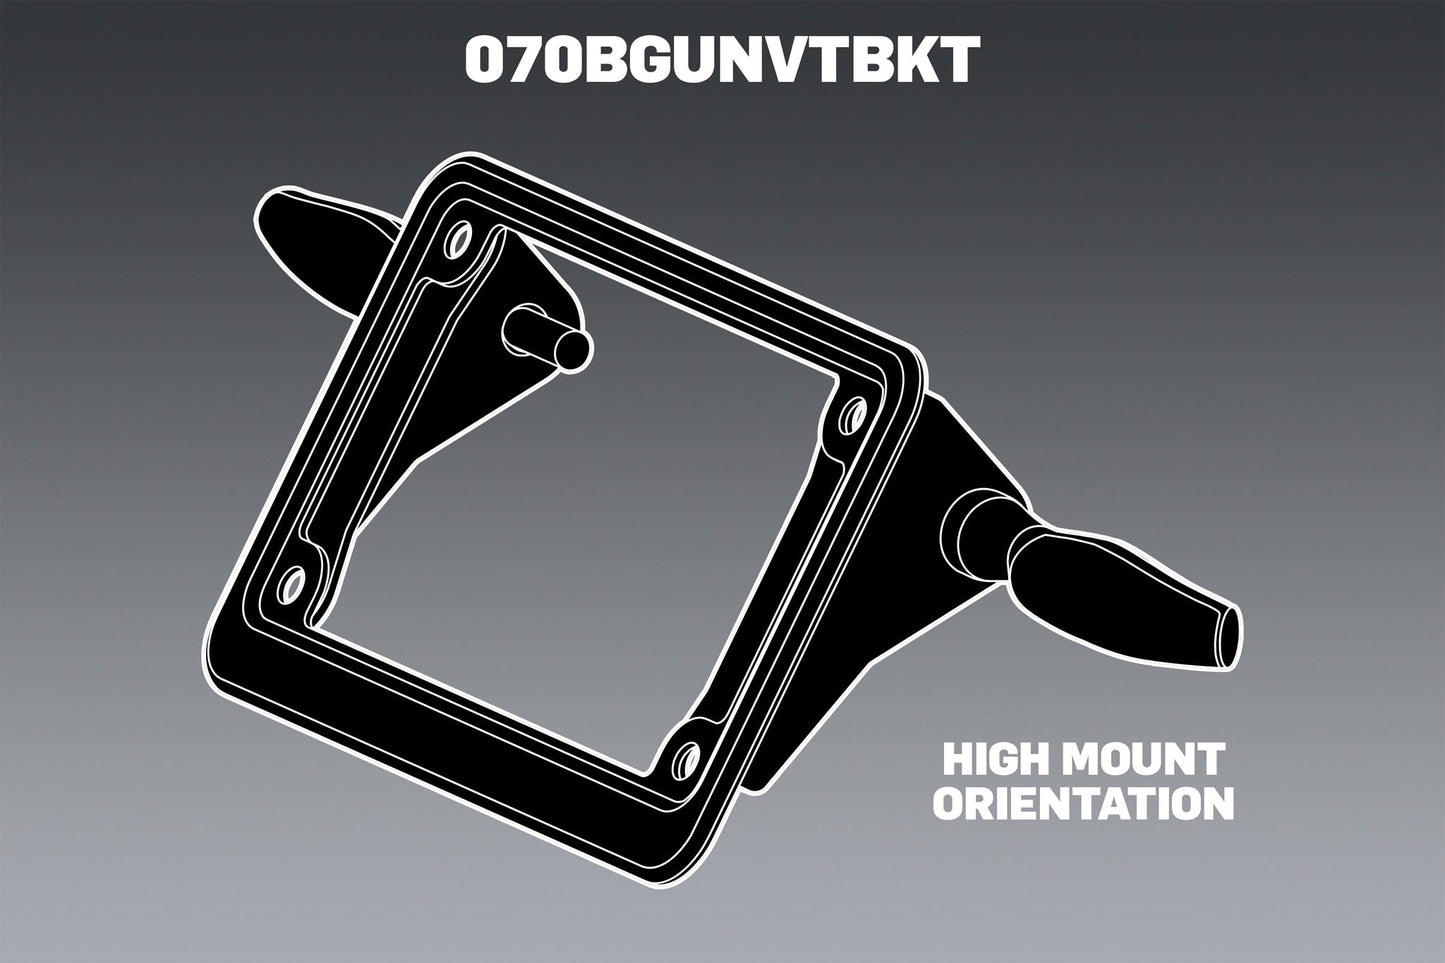 Yoshimura Universal Standard-Mount Turn Signal Bracket Kit 070bgunvtbkt